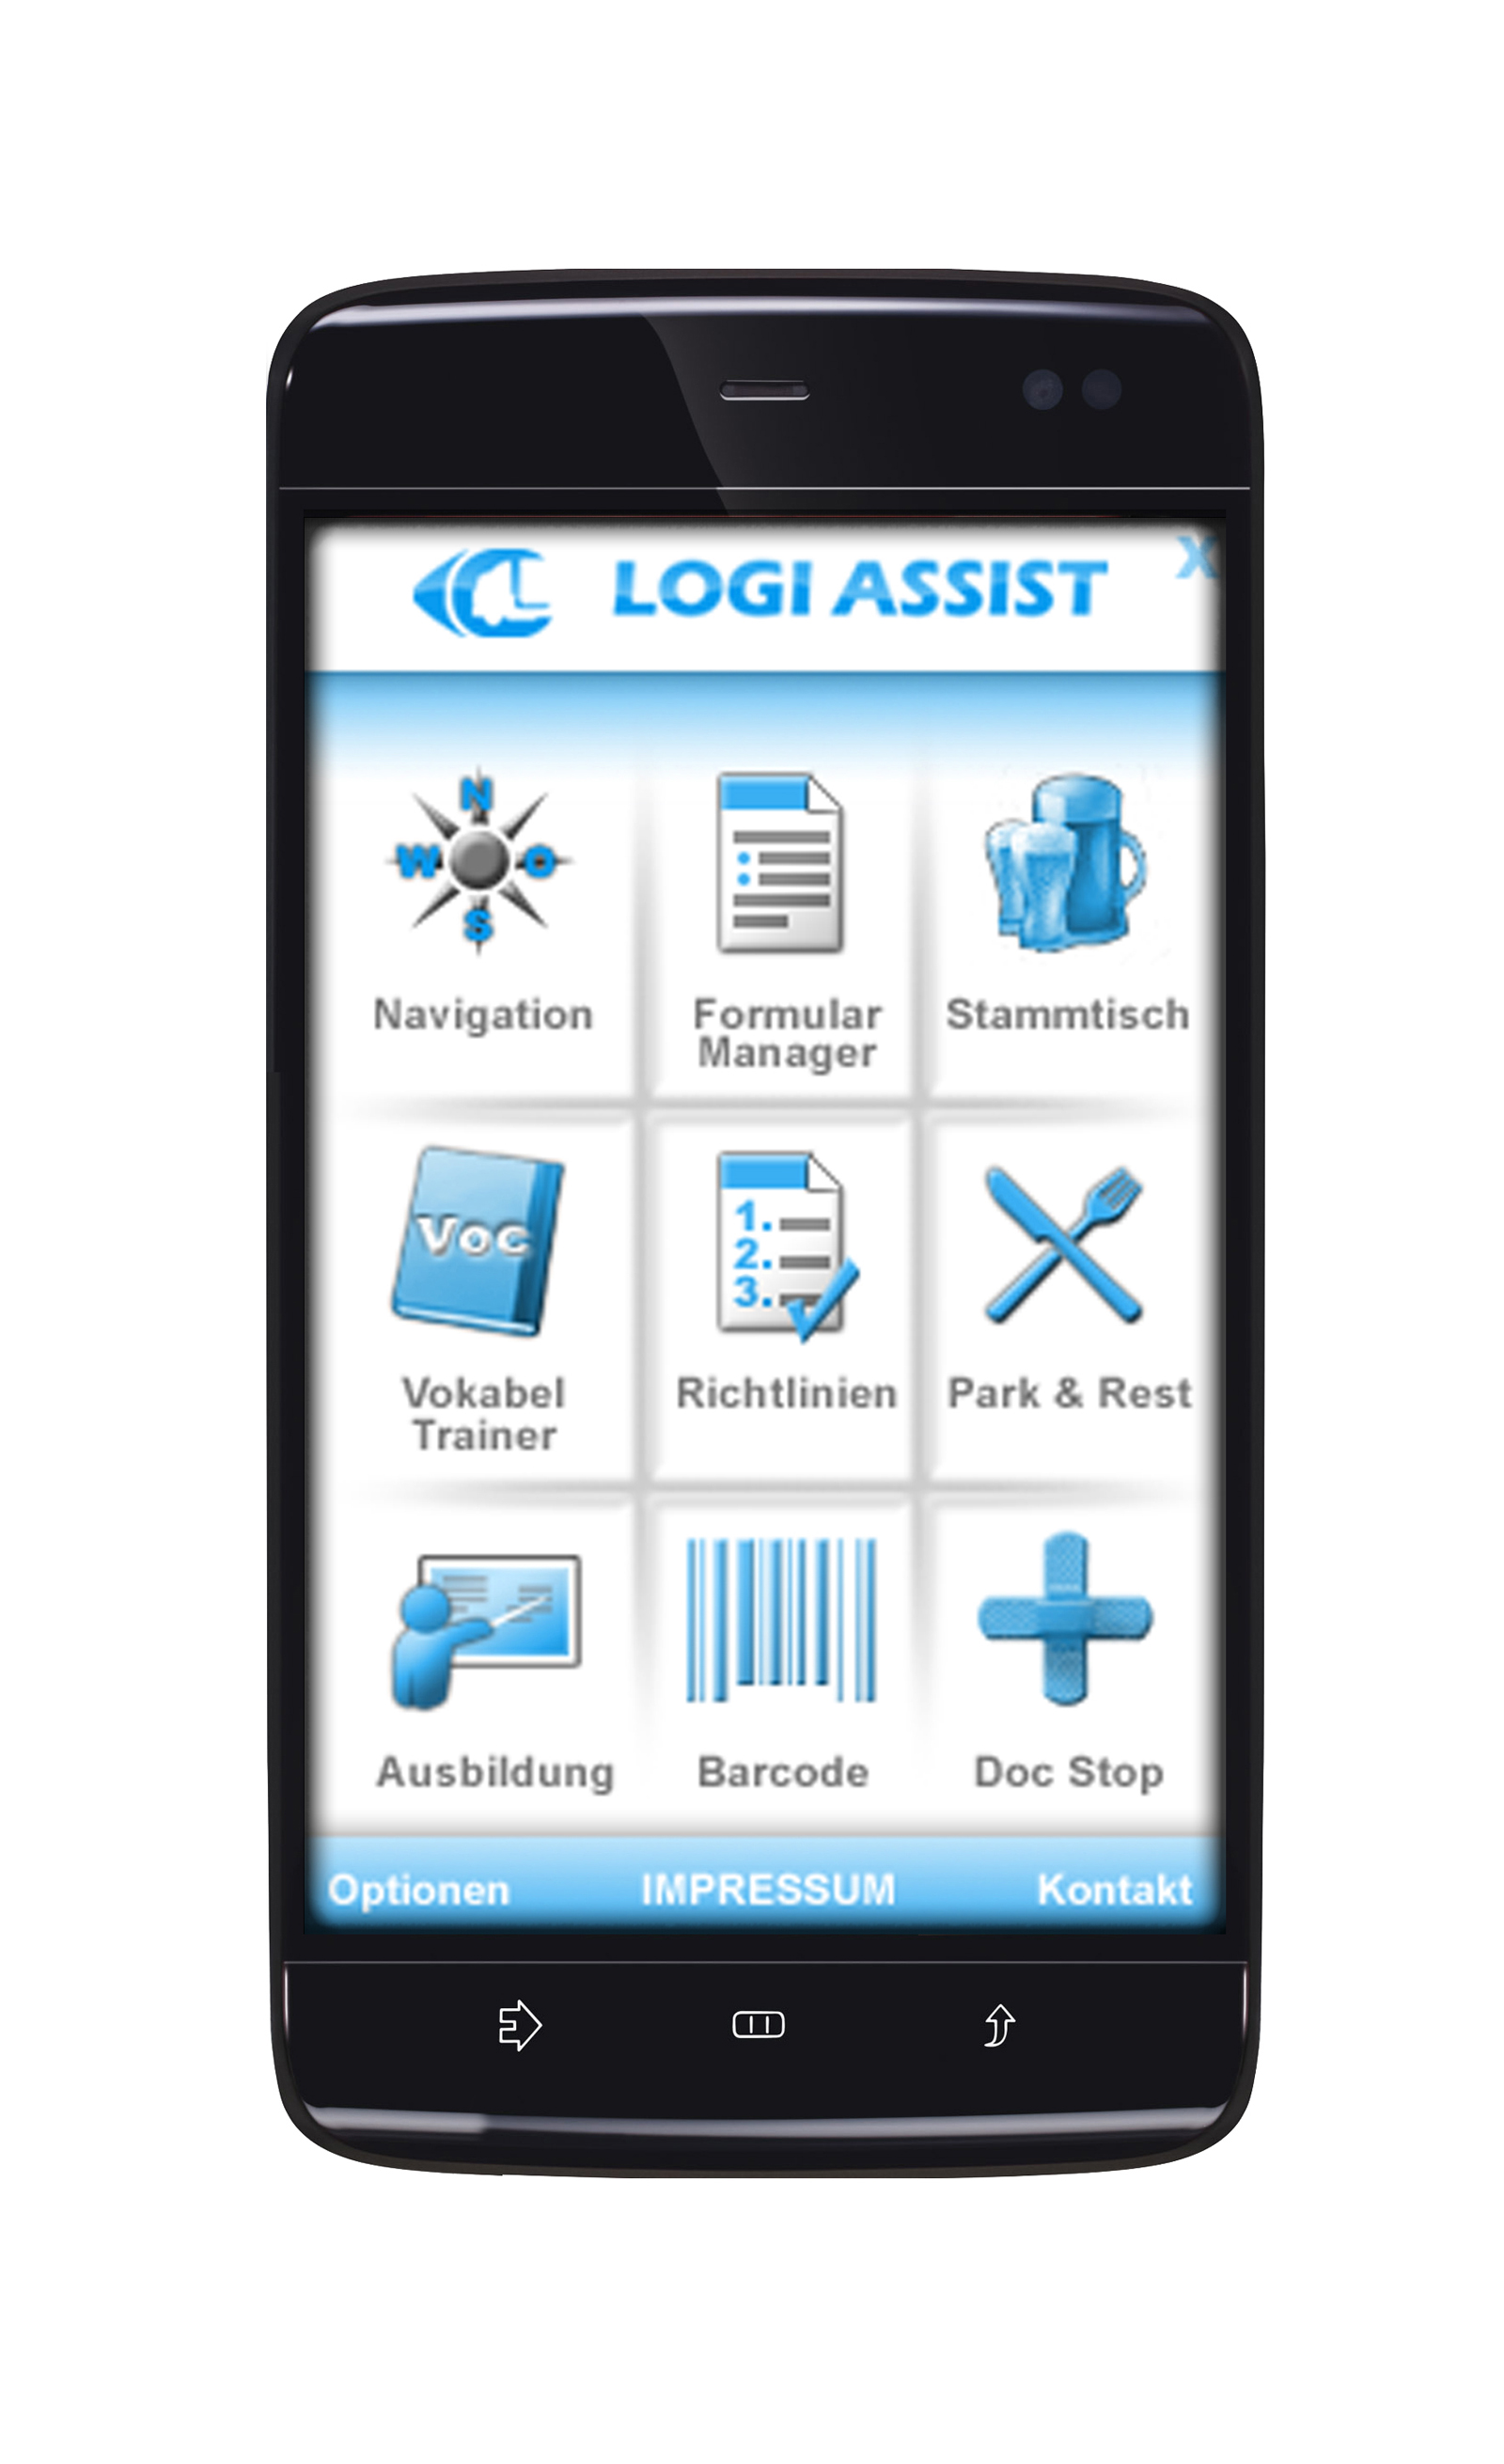 Bild: System LogiAssist via Smartphone